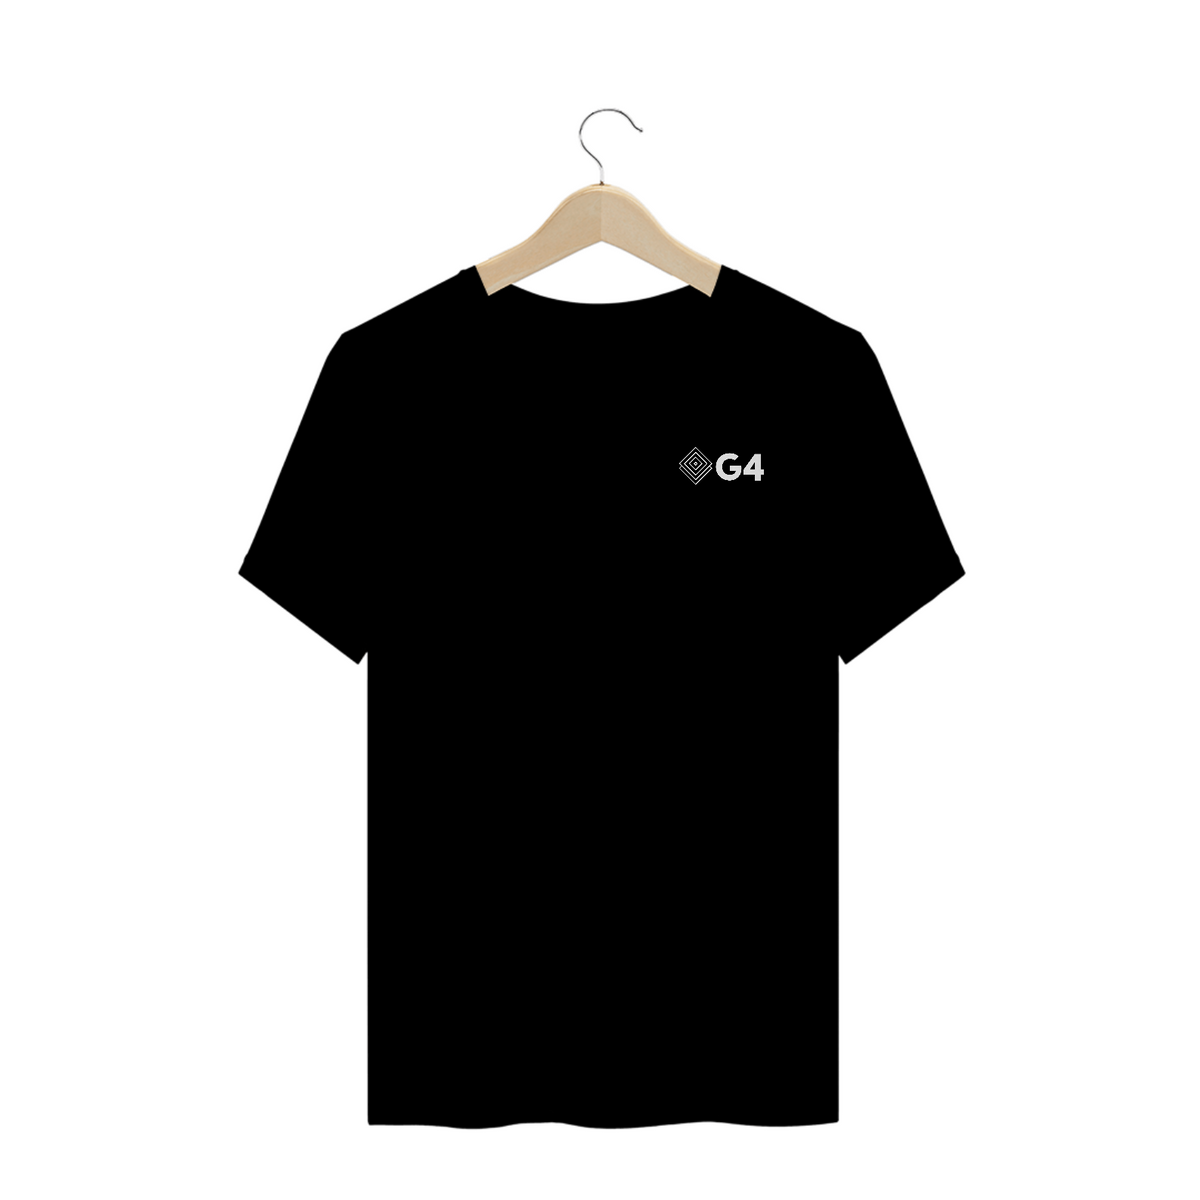 Nome do produto: Camiseta G4 -  LOGO PEQUENO